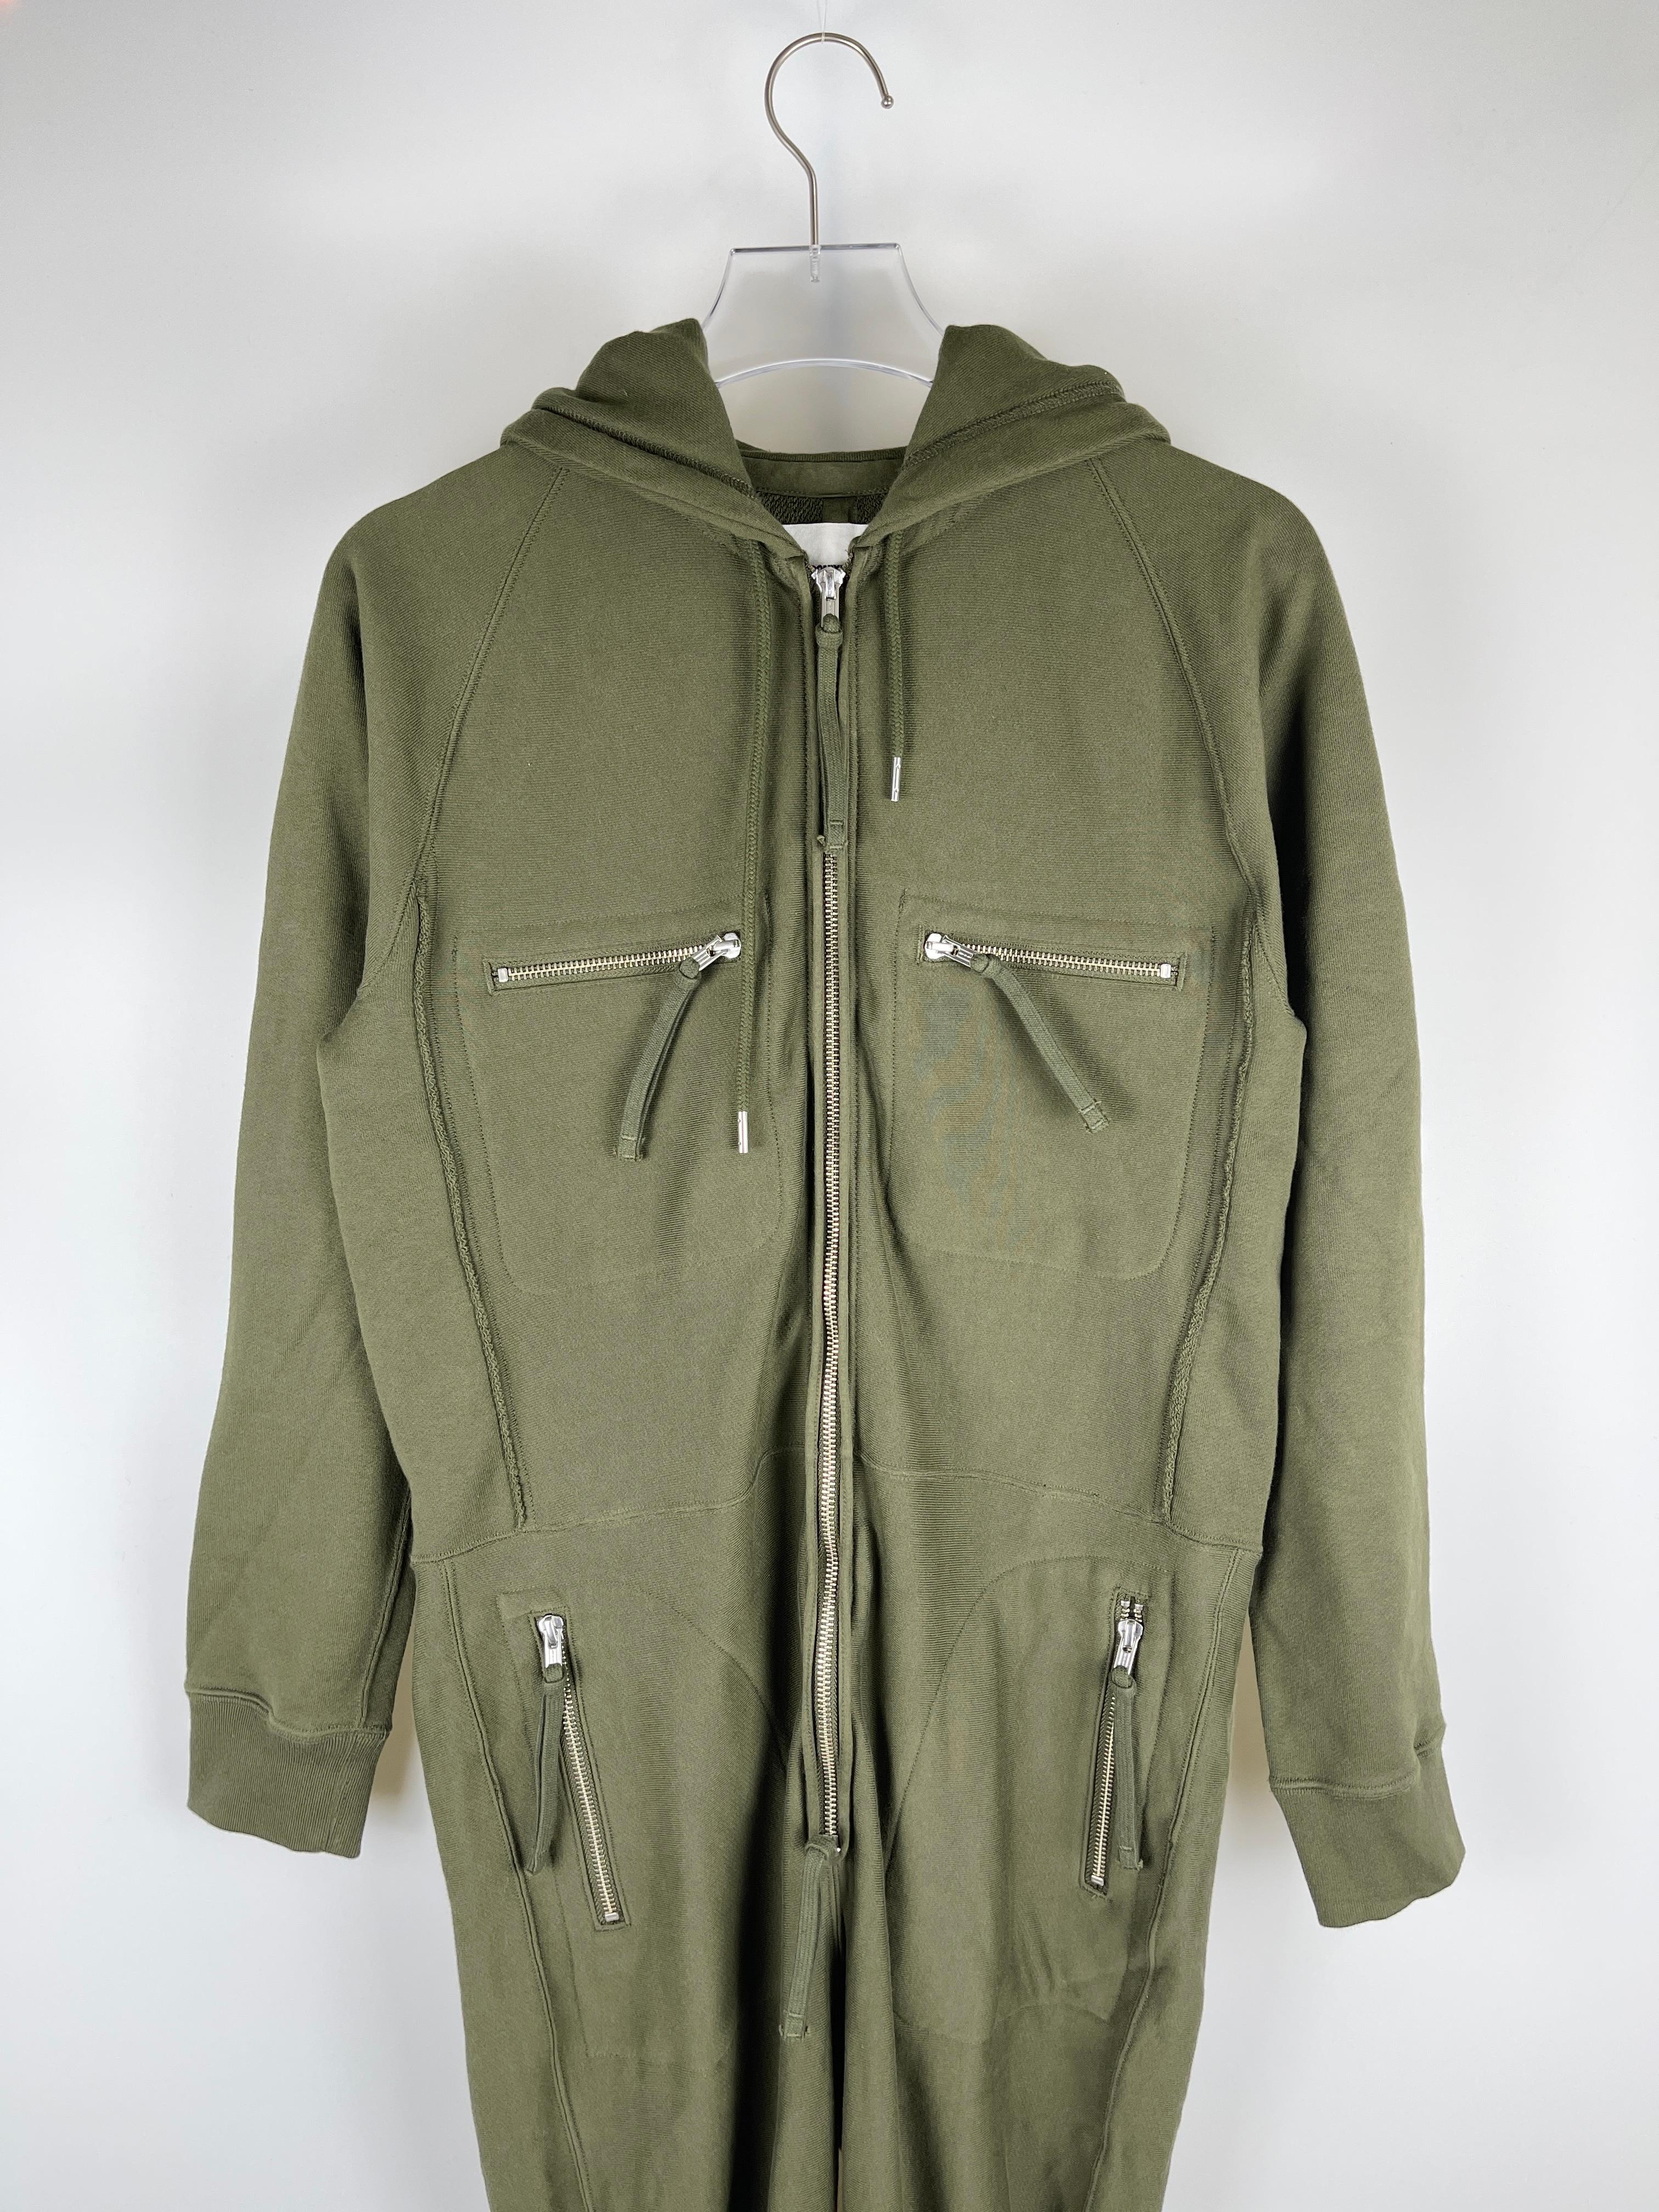 TakahiroMiyashita TheSoloist S/S2017 Army Green Jumpsuit For Sale 4